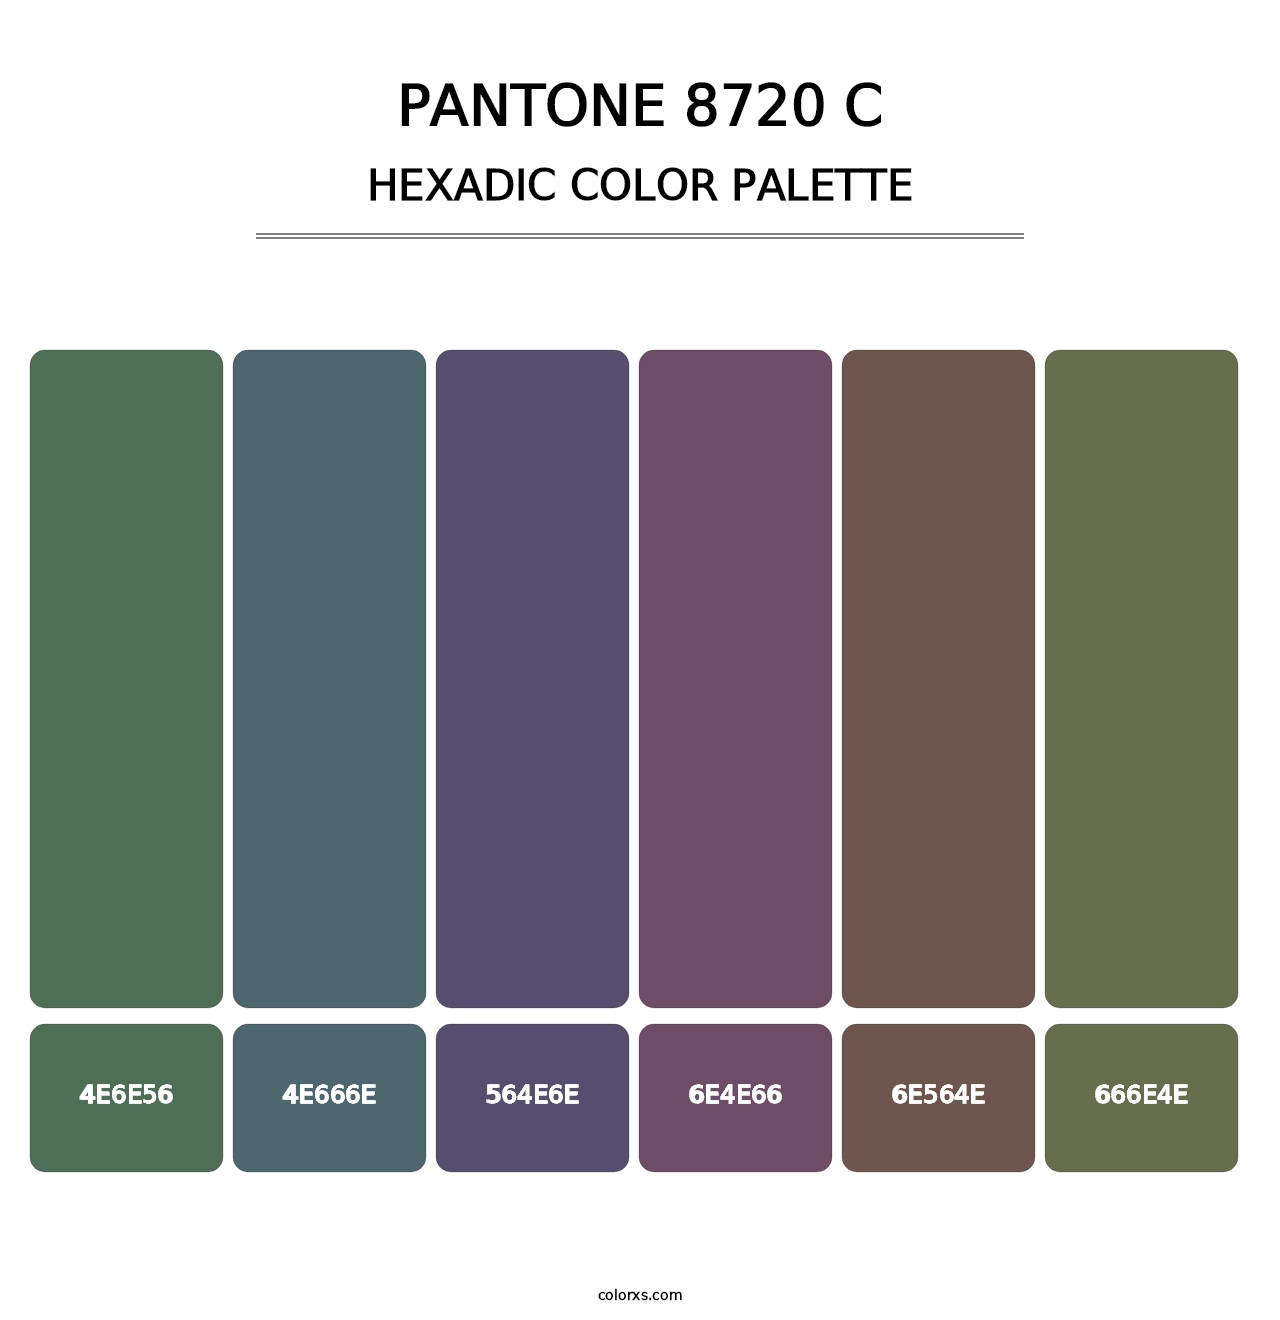 PANTONE 8720 C - Hexadic Color Palette